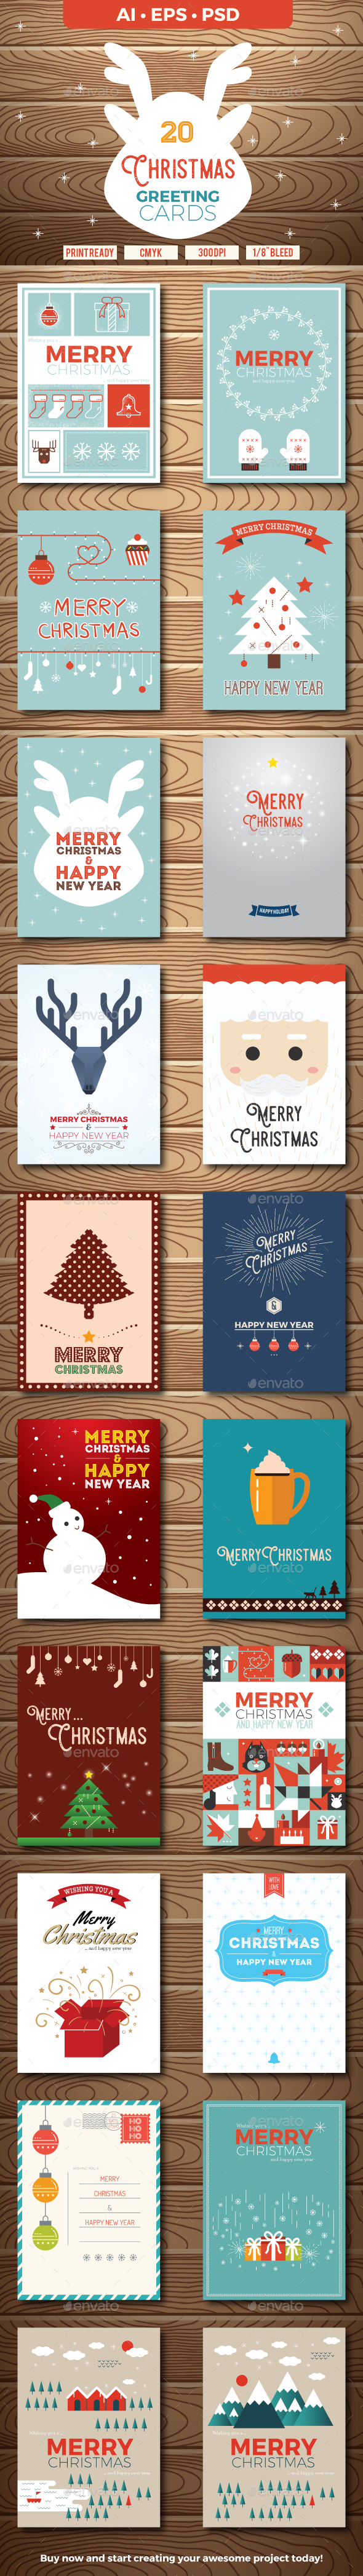 20 Christmas Greeting Cards